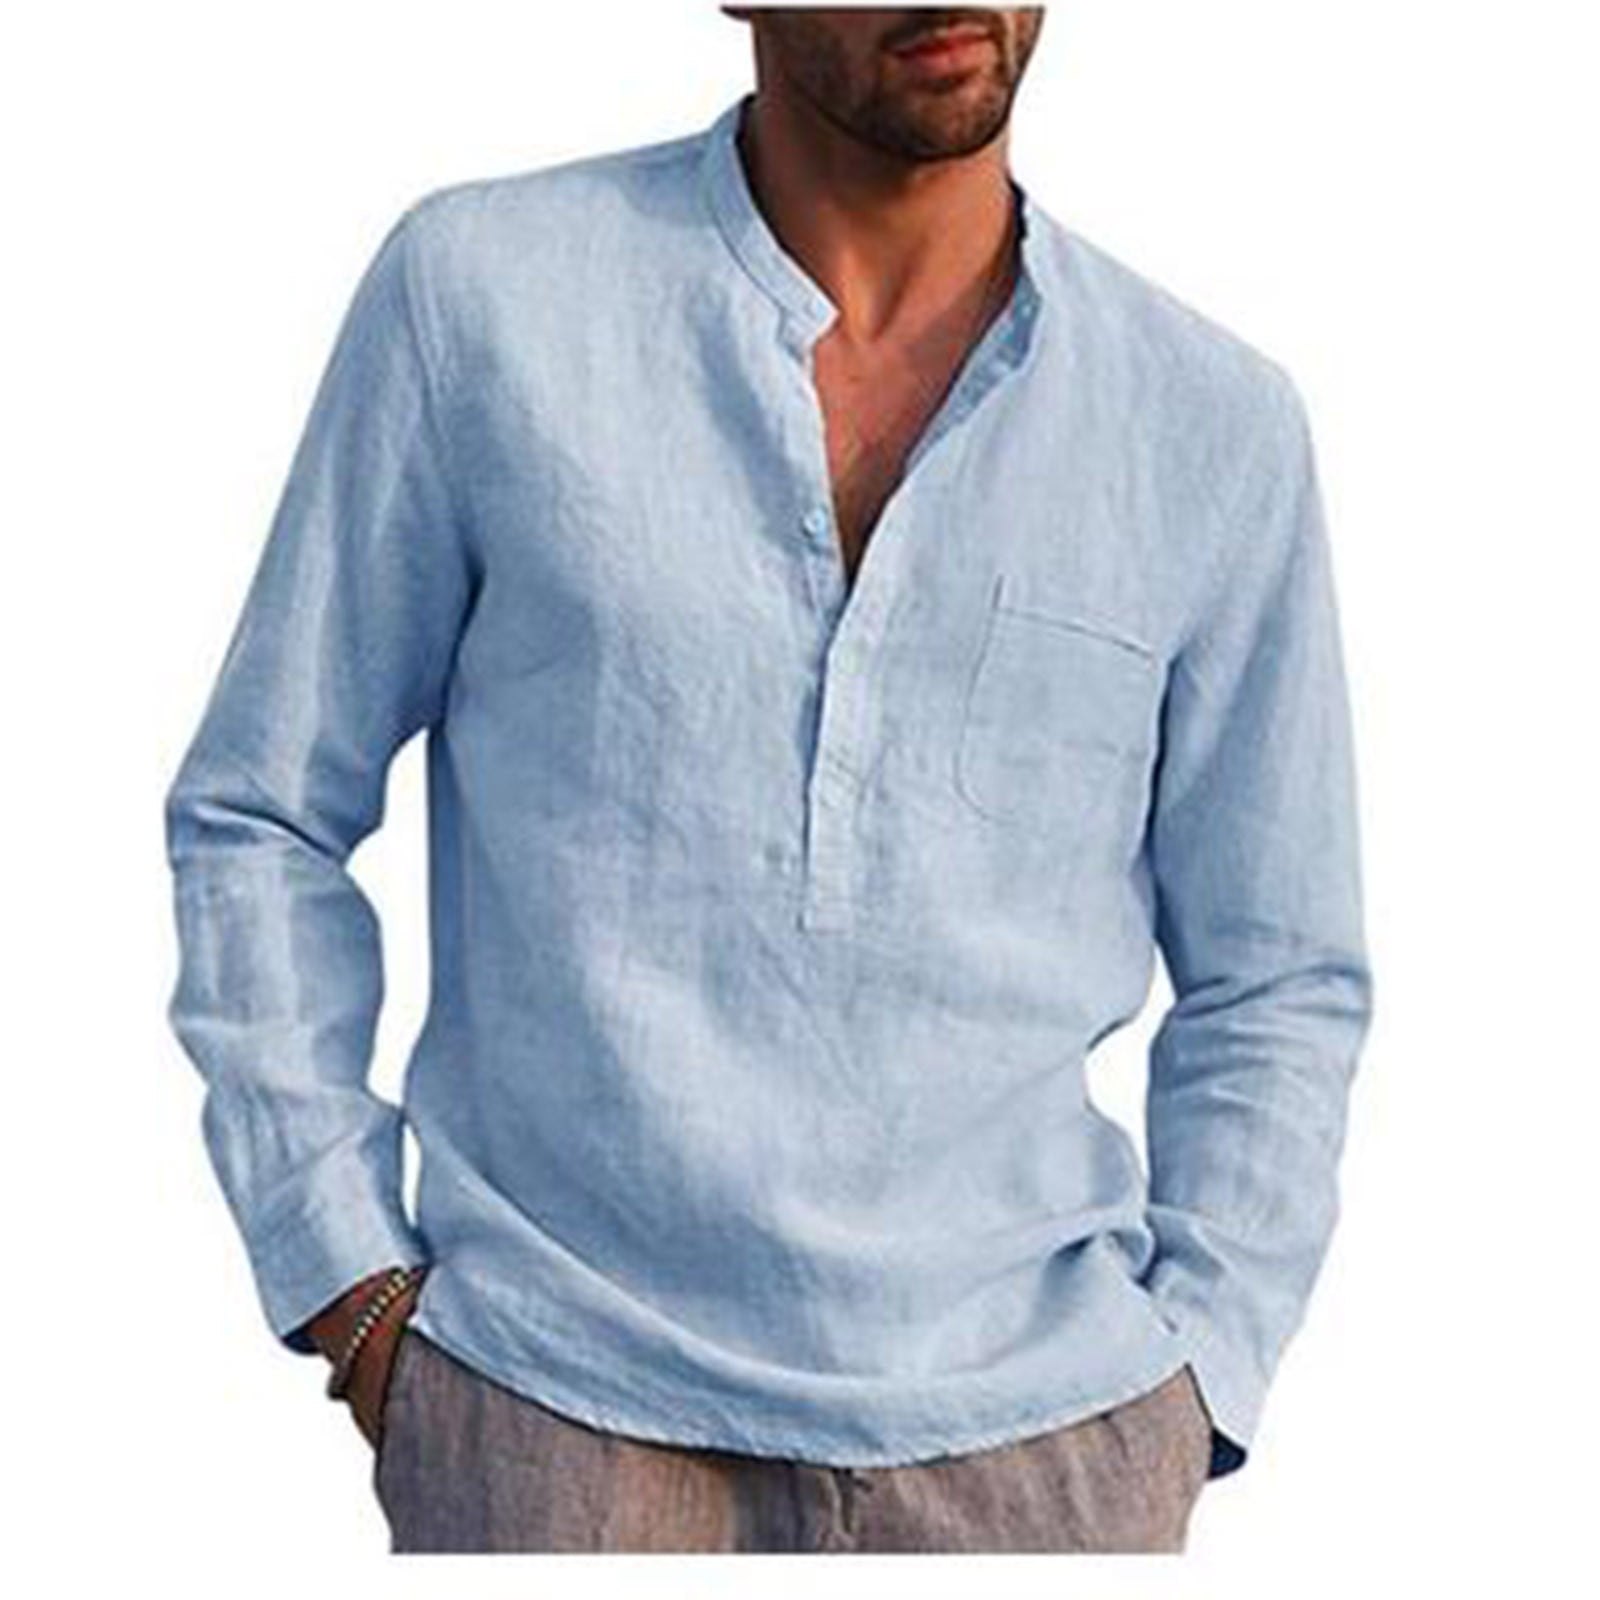 EINCcm Mens Short Sleeve Plaid Shirt Button Down Shirt for Men Slim Fit Casual Tops Blouses 